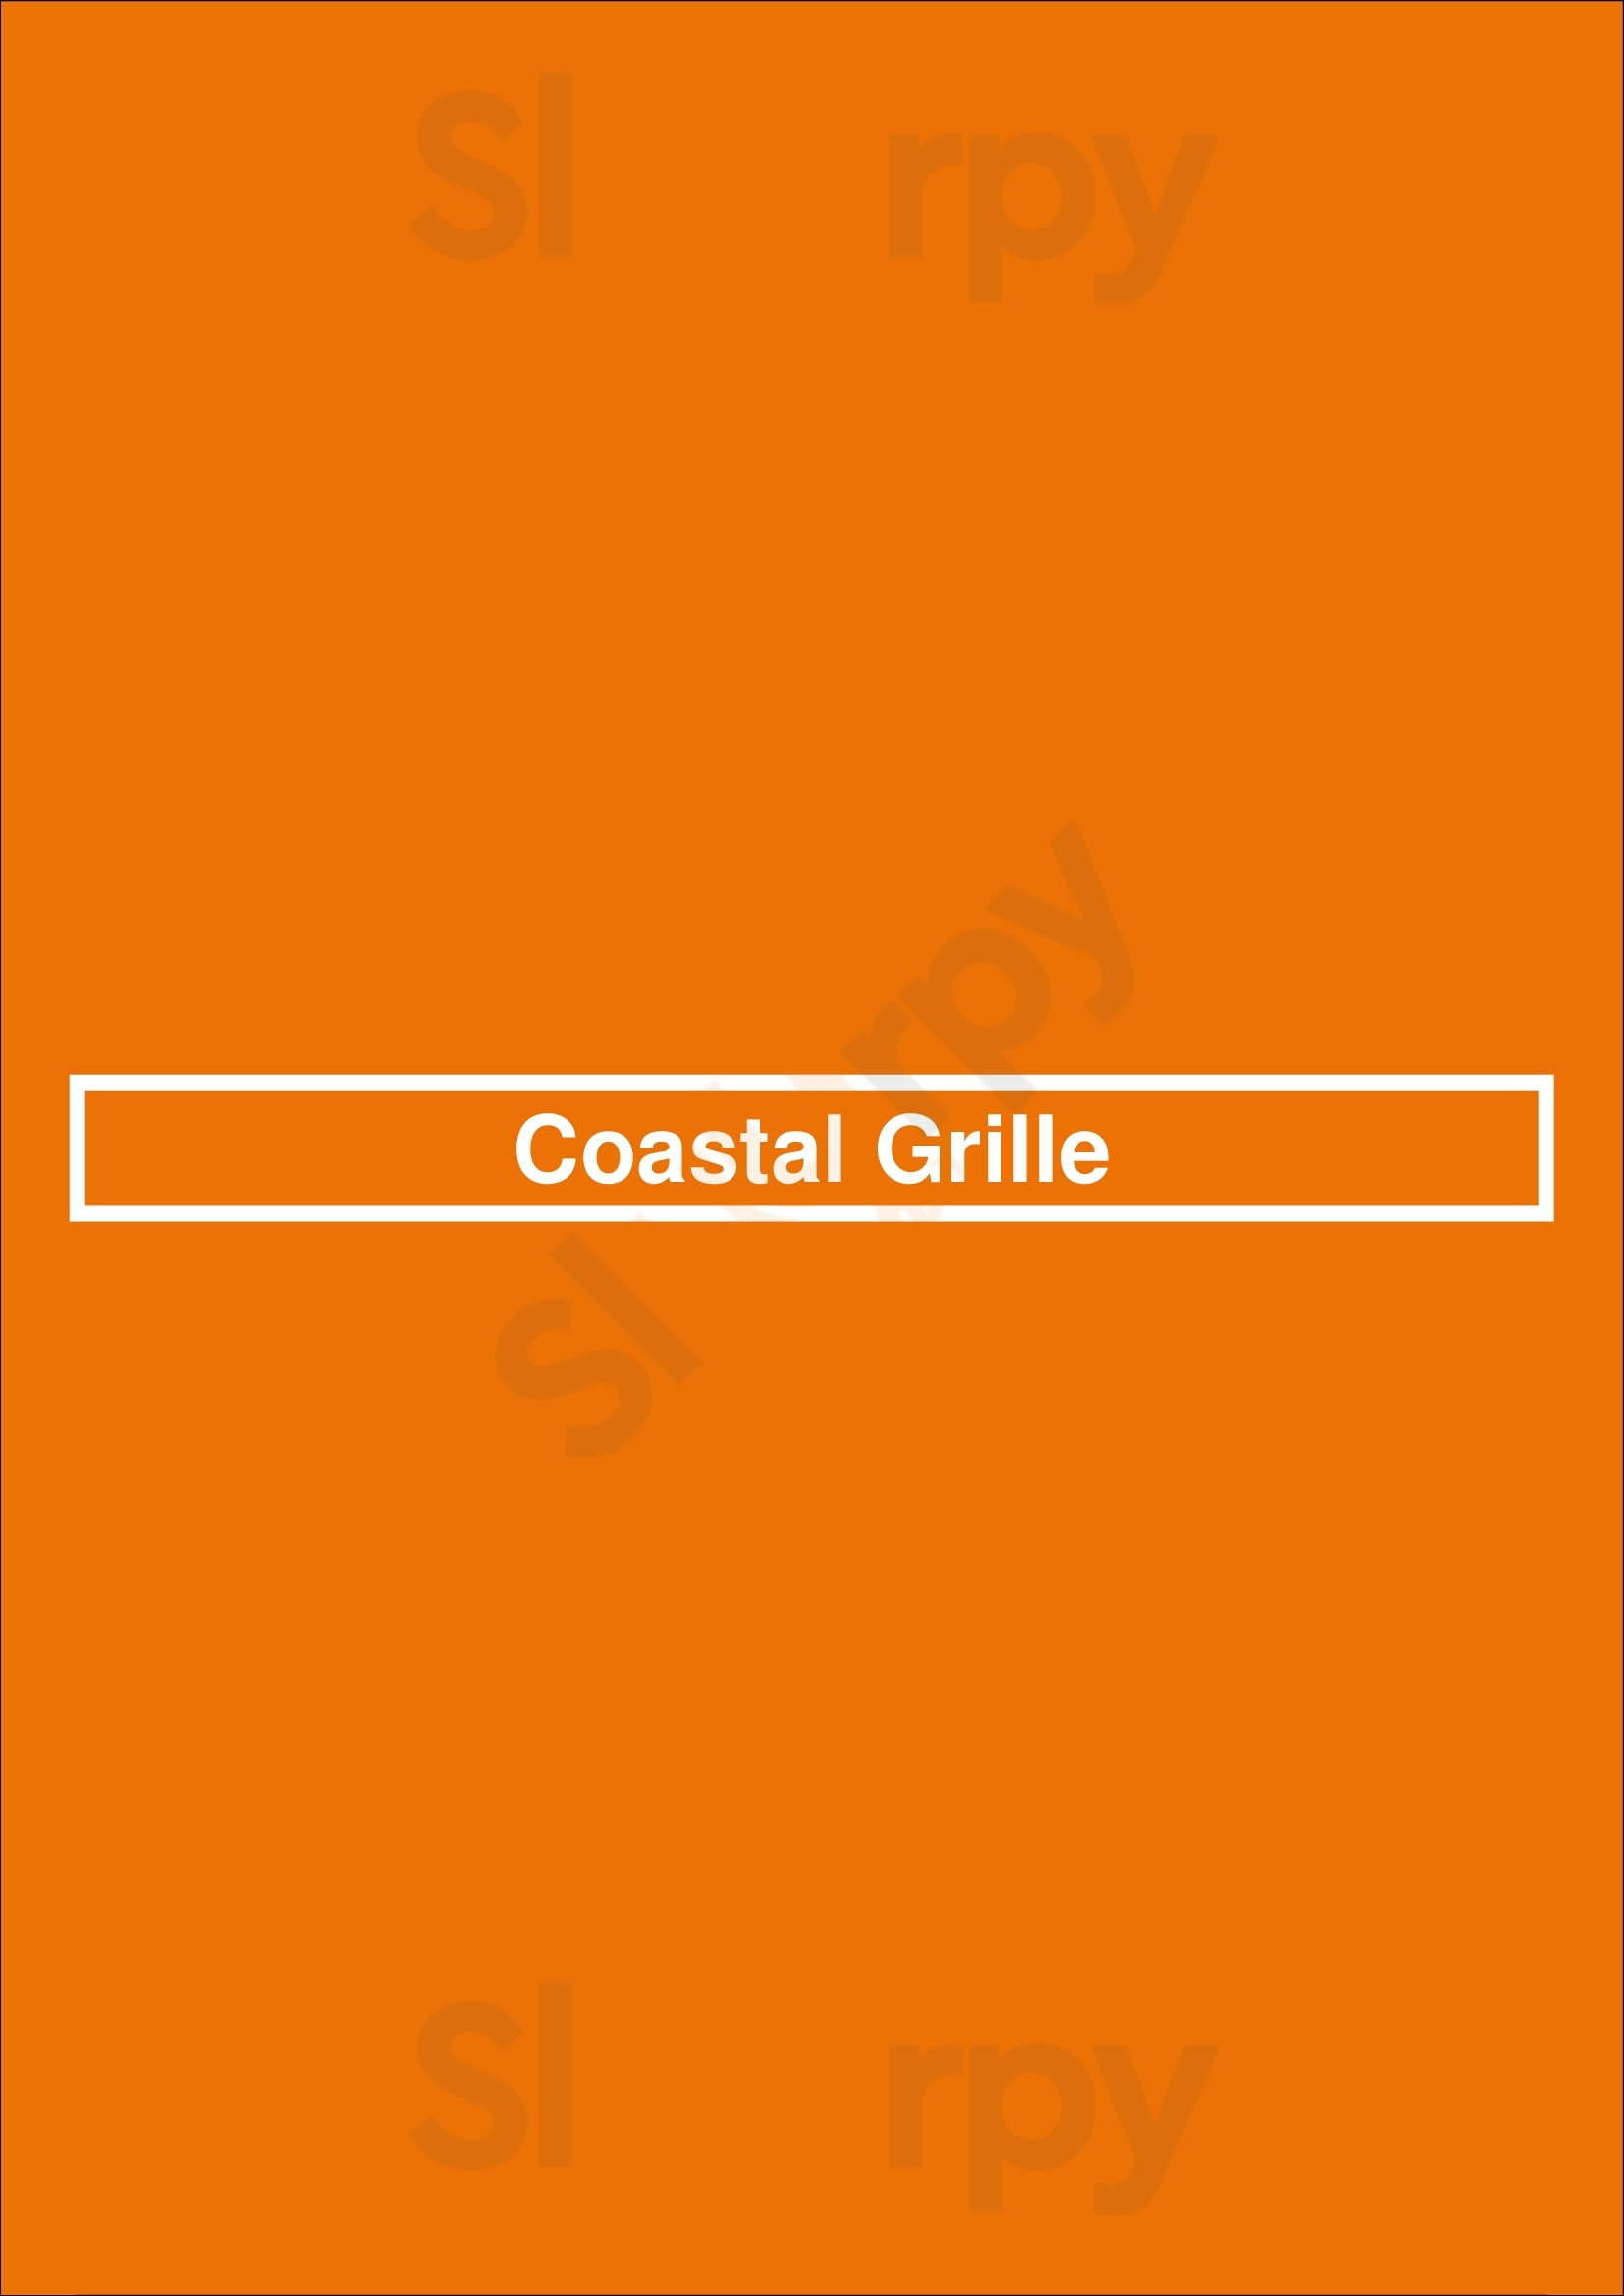 Coastal Grille Wyomissing Menu - 1